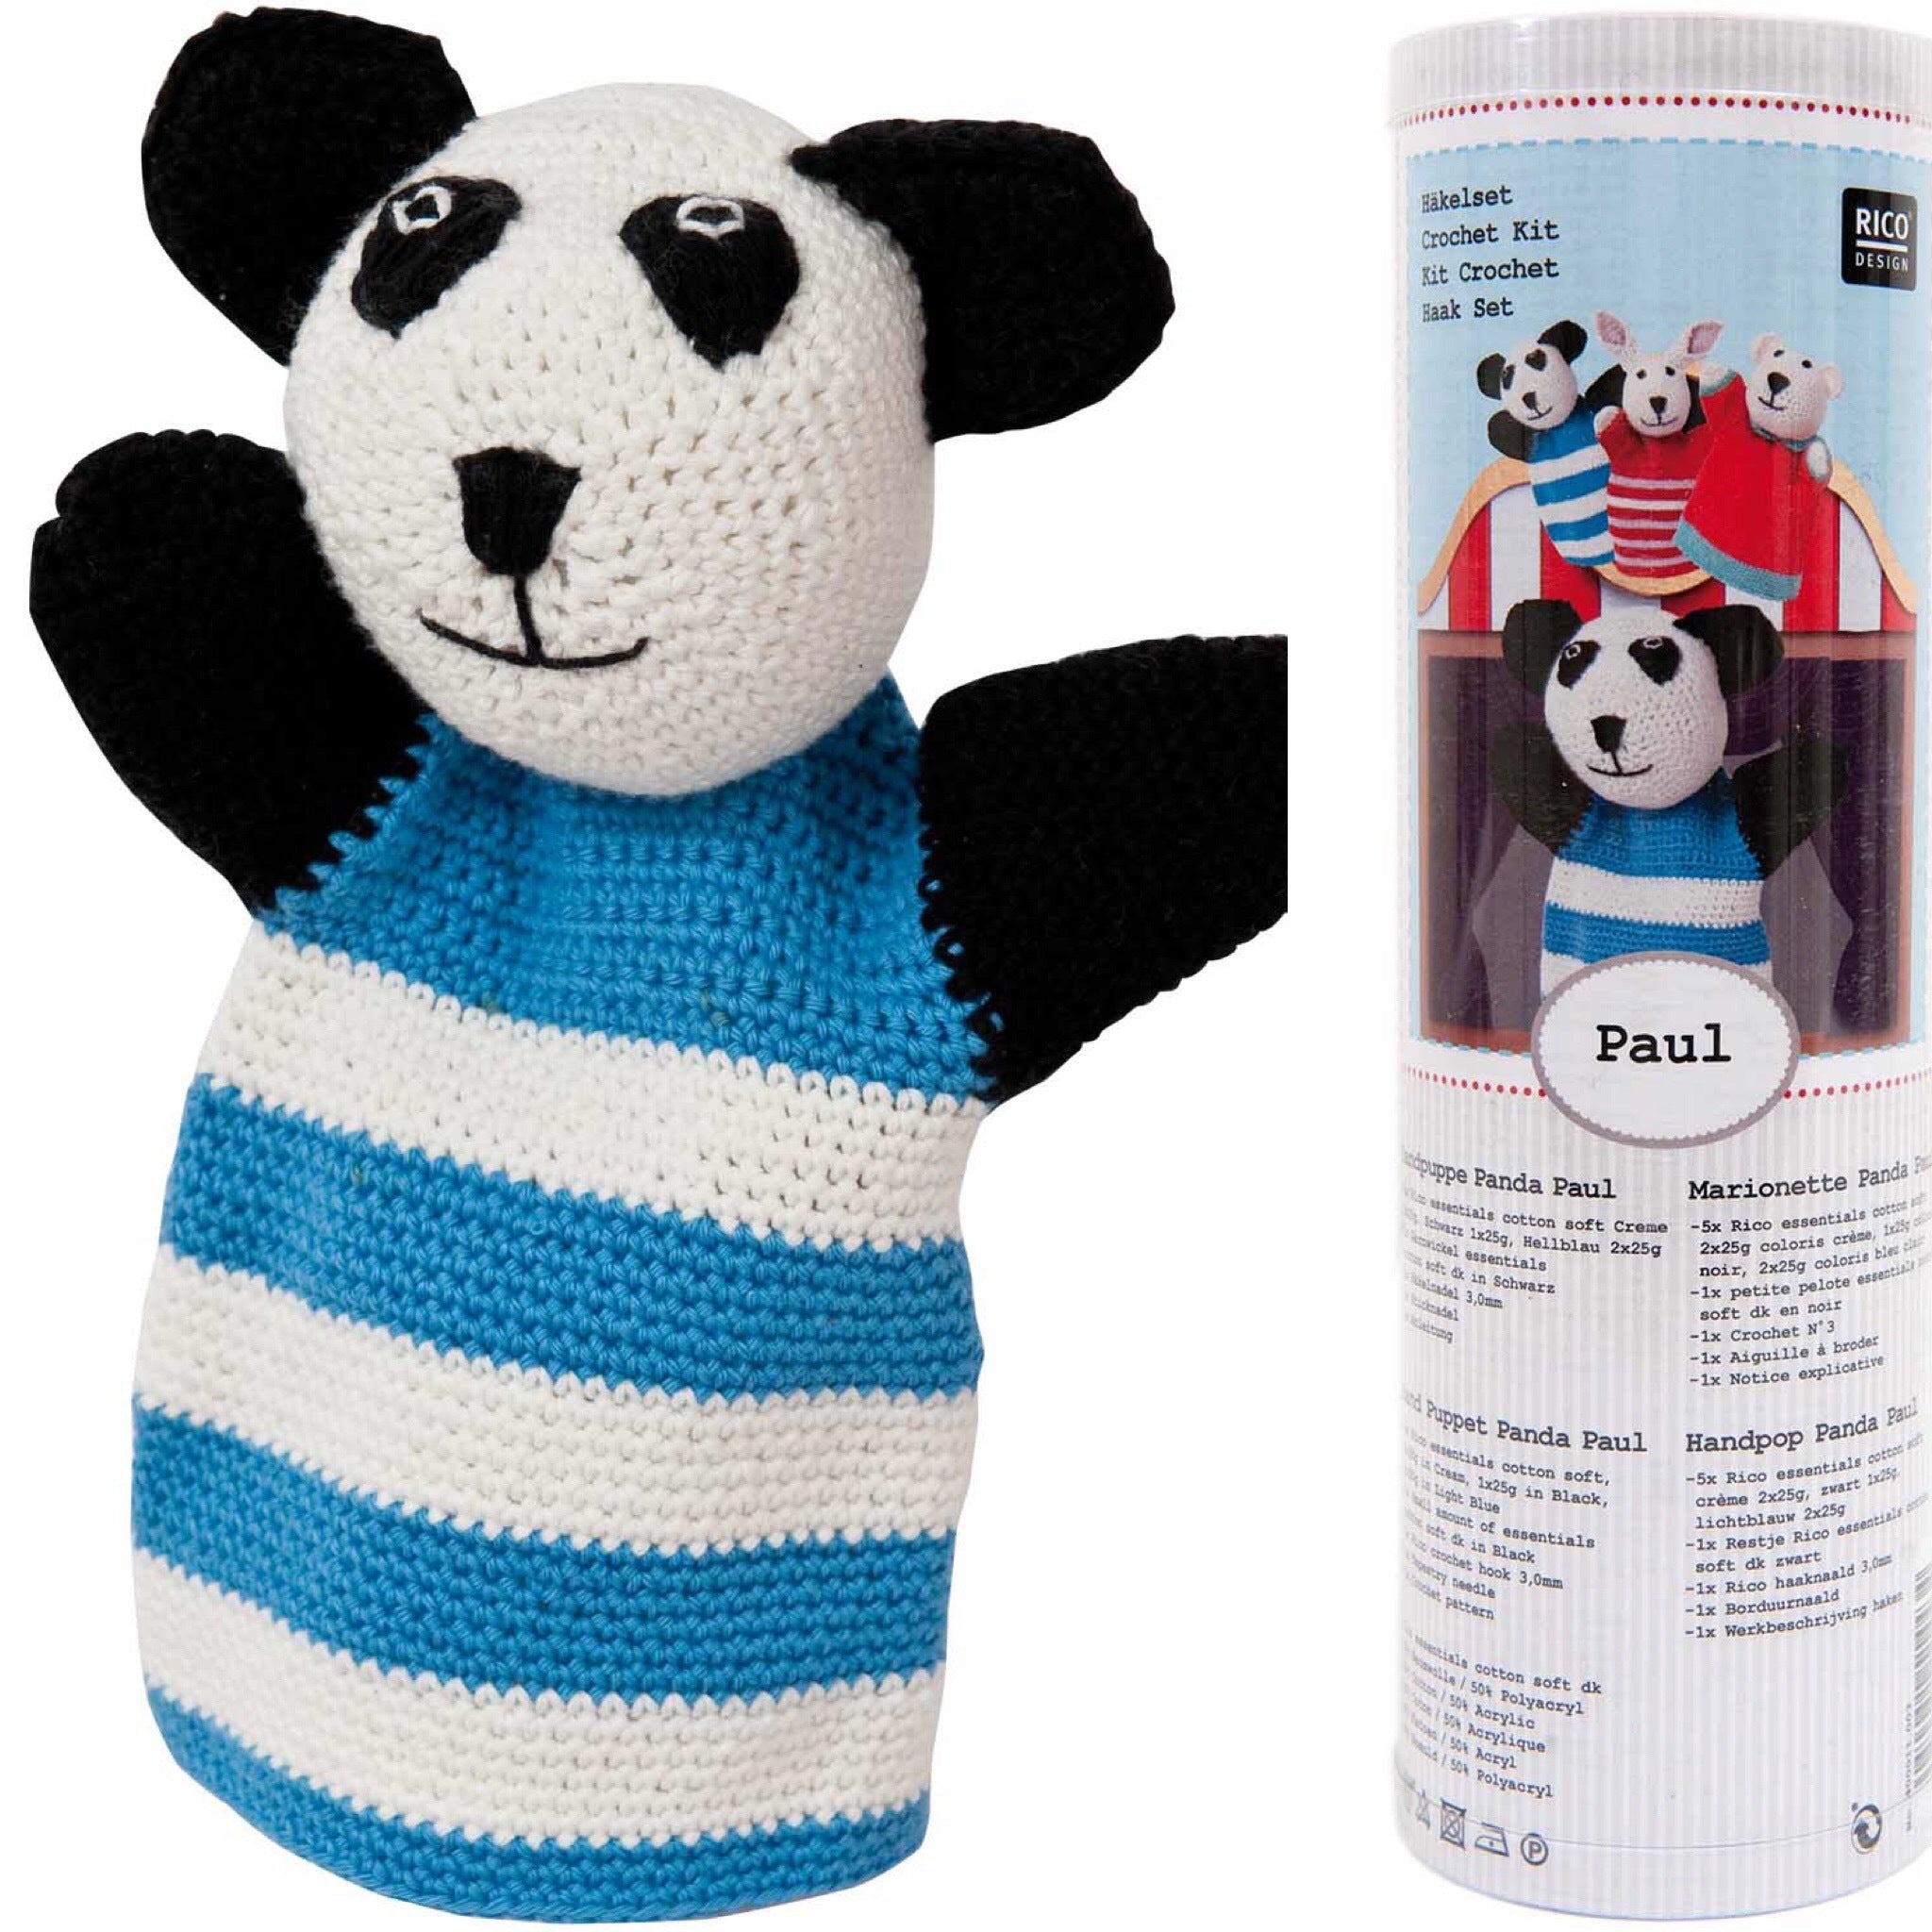 Paul crochet panda hand puppet kit by Rico